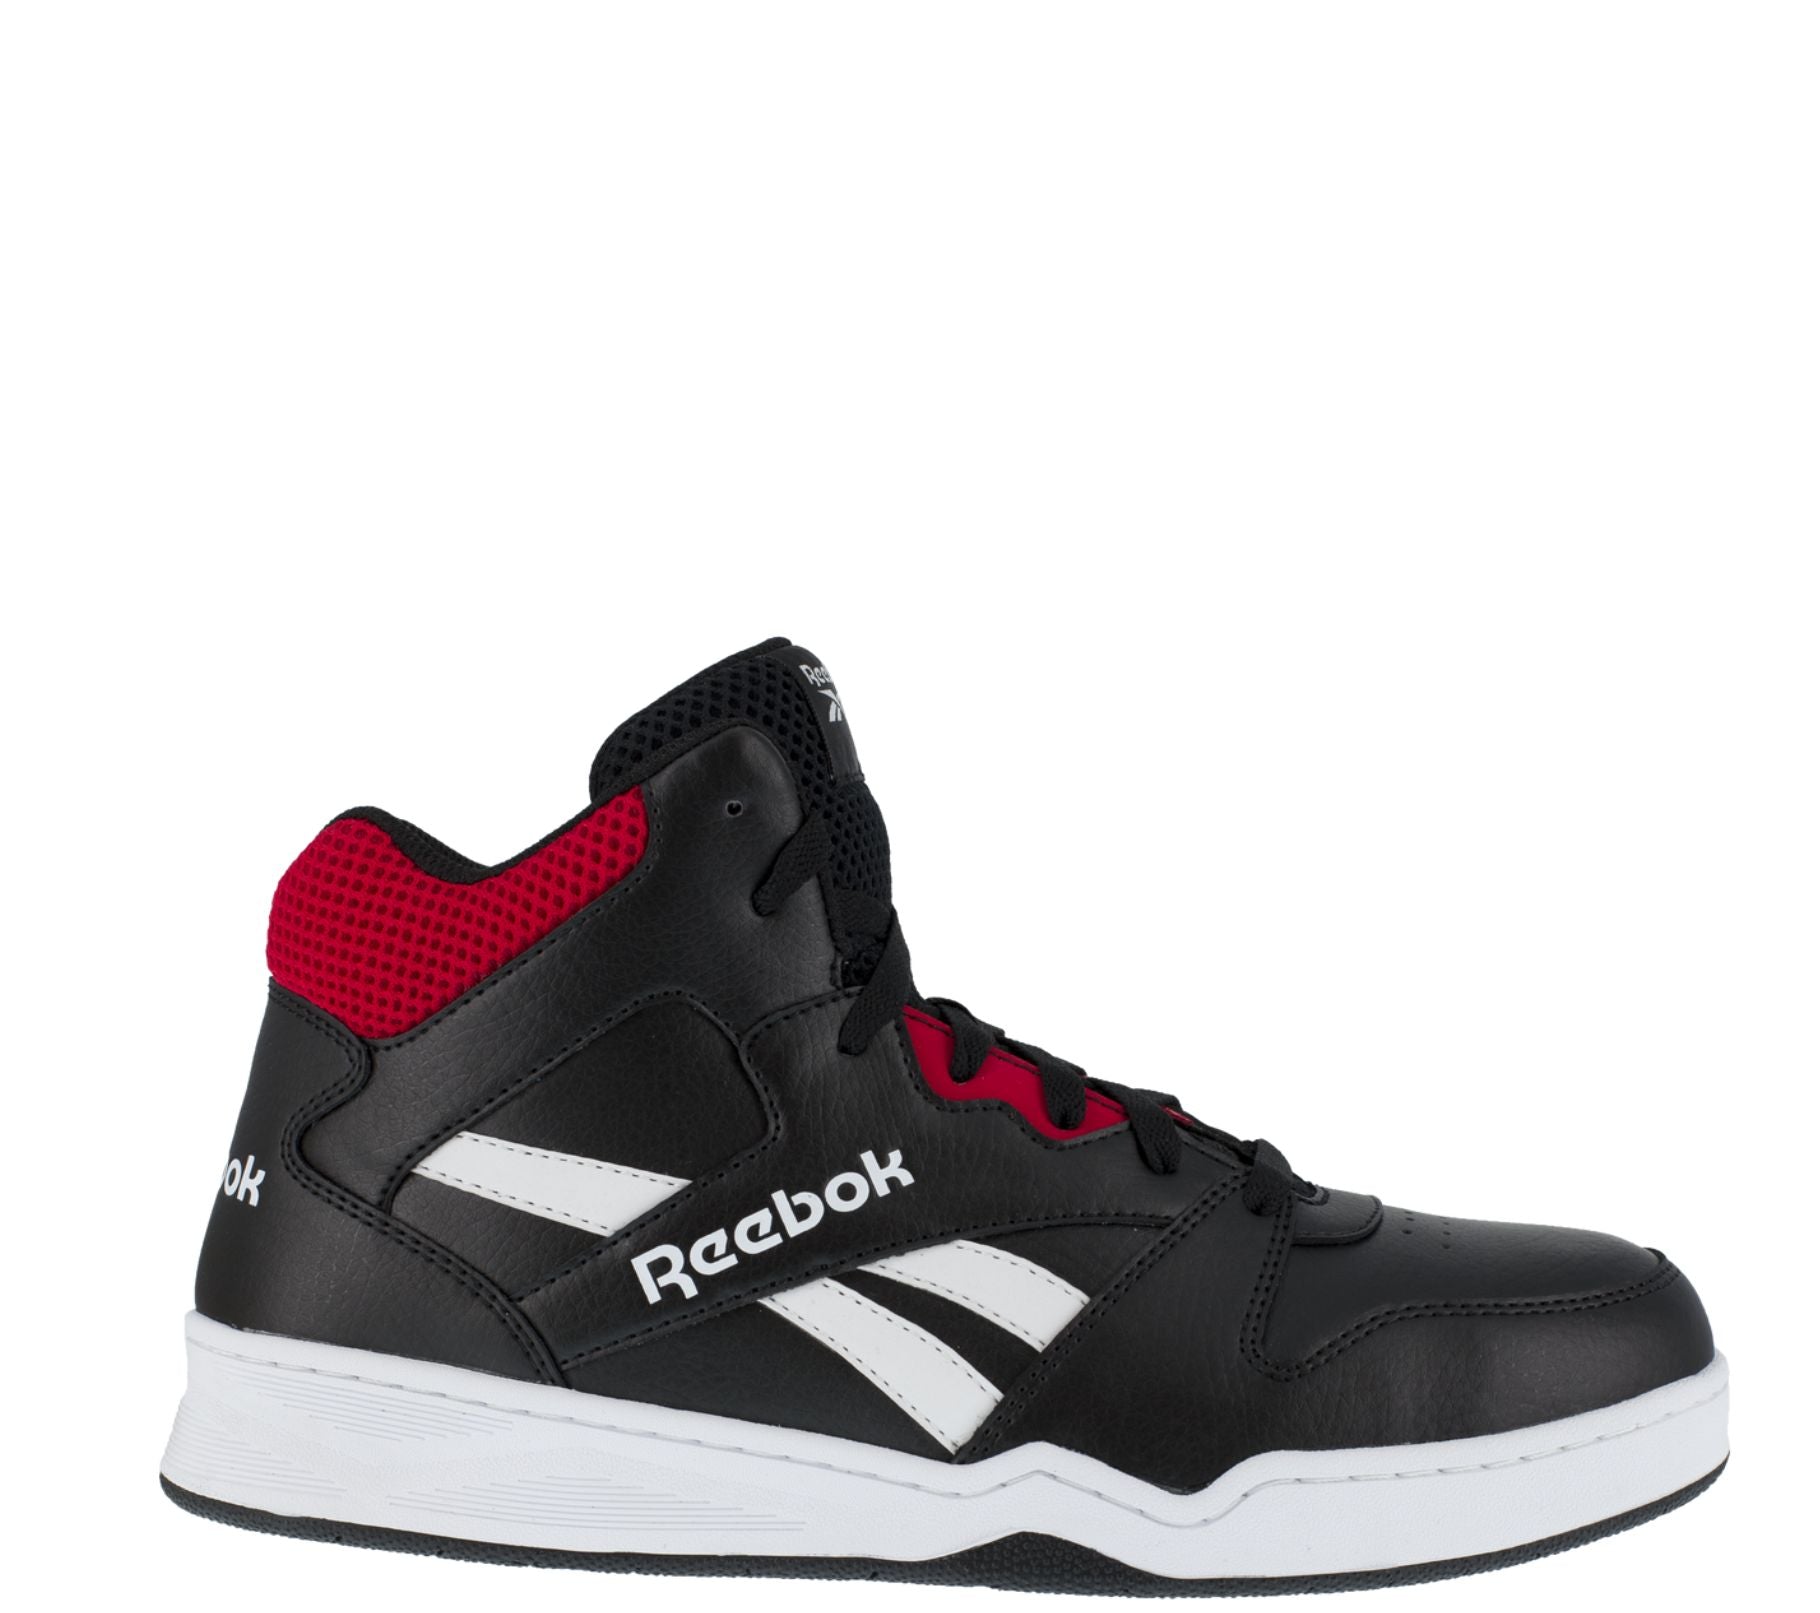 Reebok Work Men's BB4500 Work EH Comp Toe High Top Sneaker - Work World - Workwear, Work Boots, Safety Gear